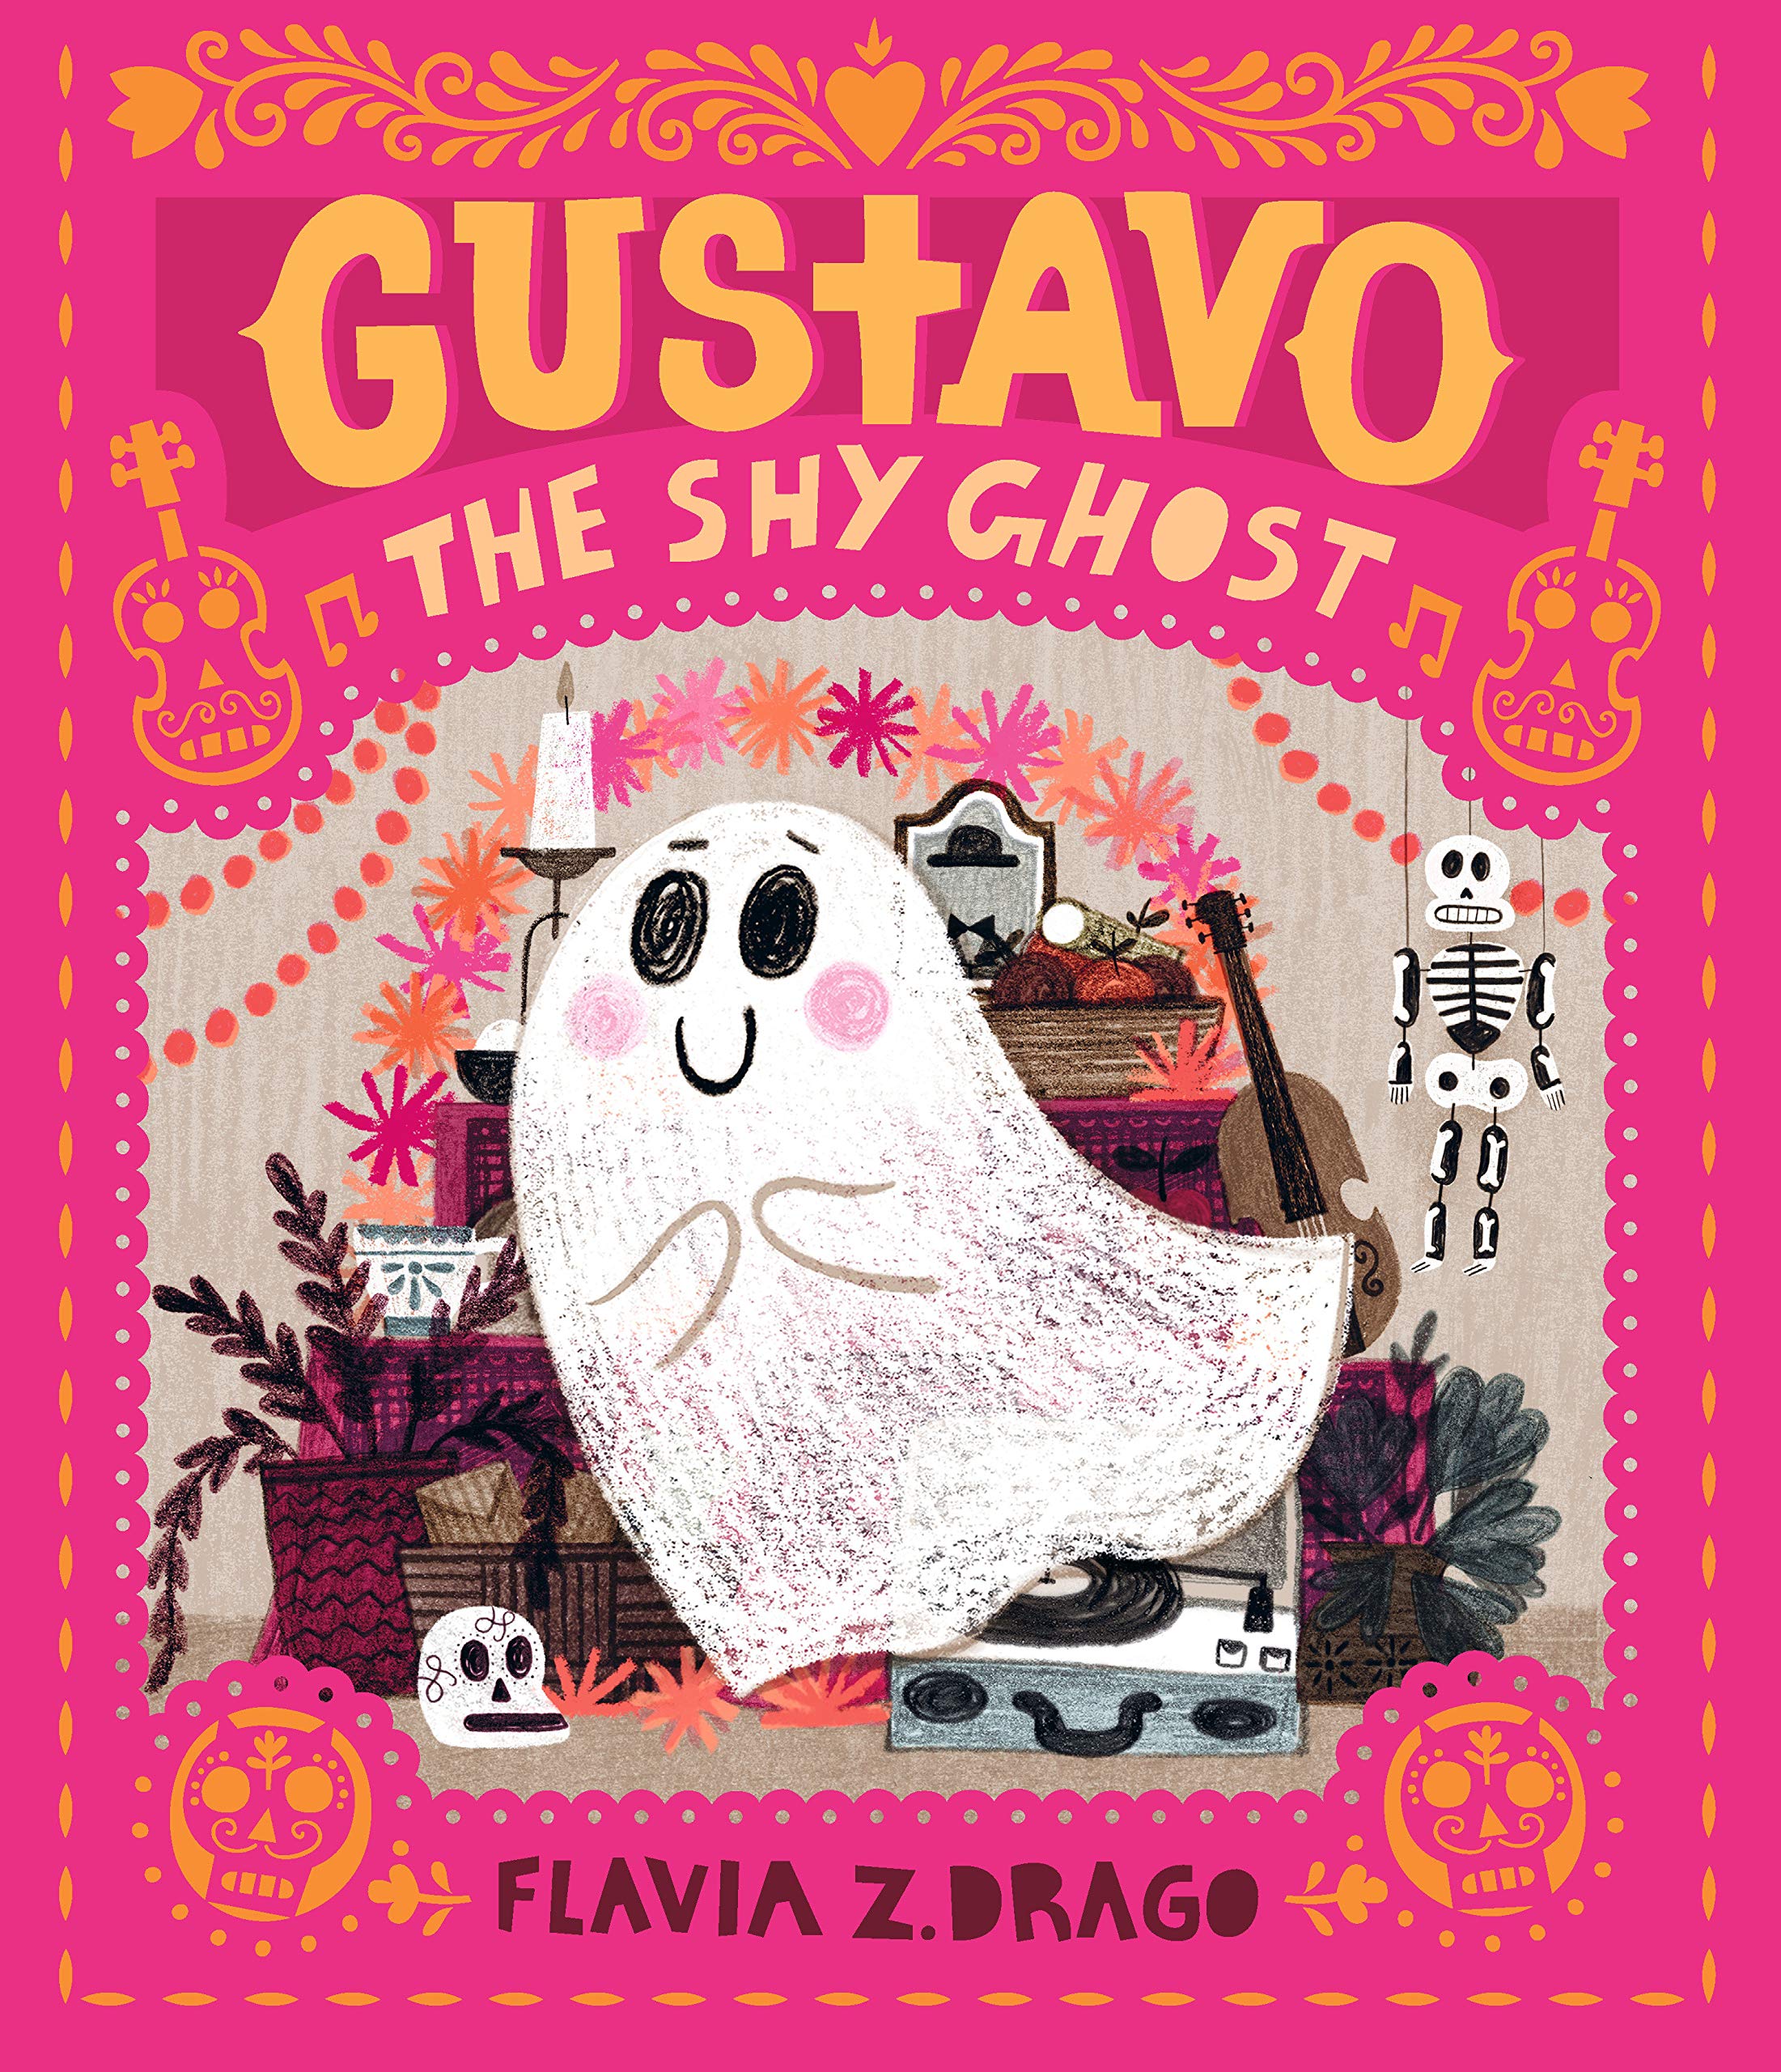 gustavo the shy ghost